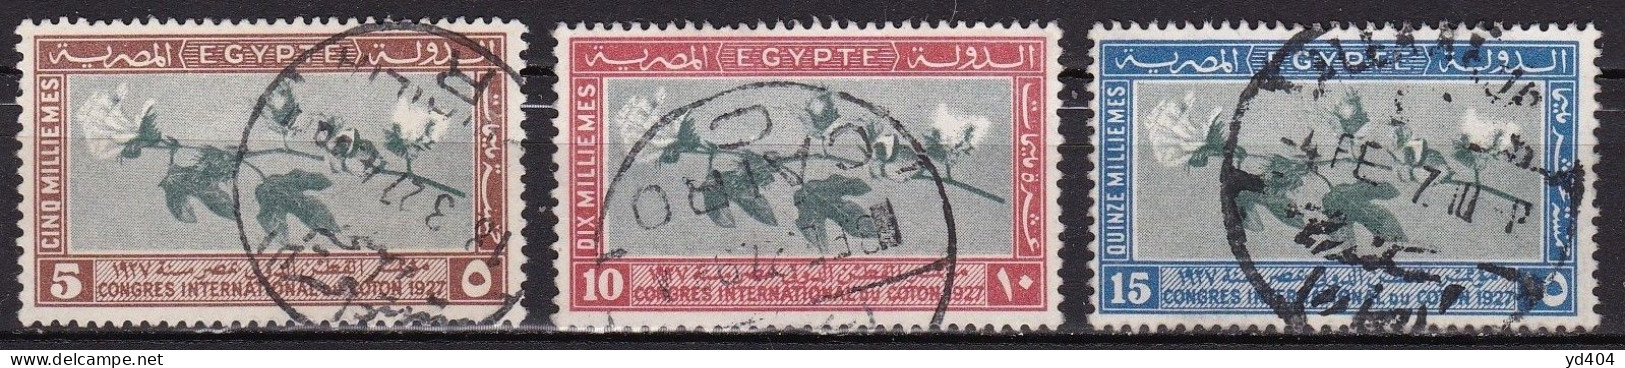 EG061 – EGYPTE – EGYPT – 1927 – INTERNATIONAL COTTON CONGRESS - Y&T # 115/117 USED - Usati